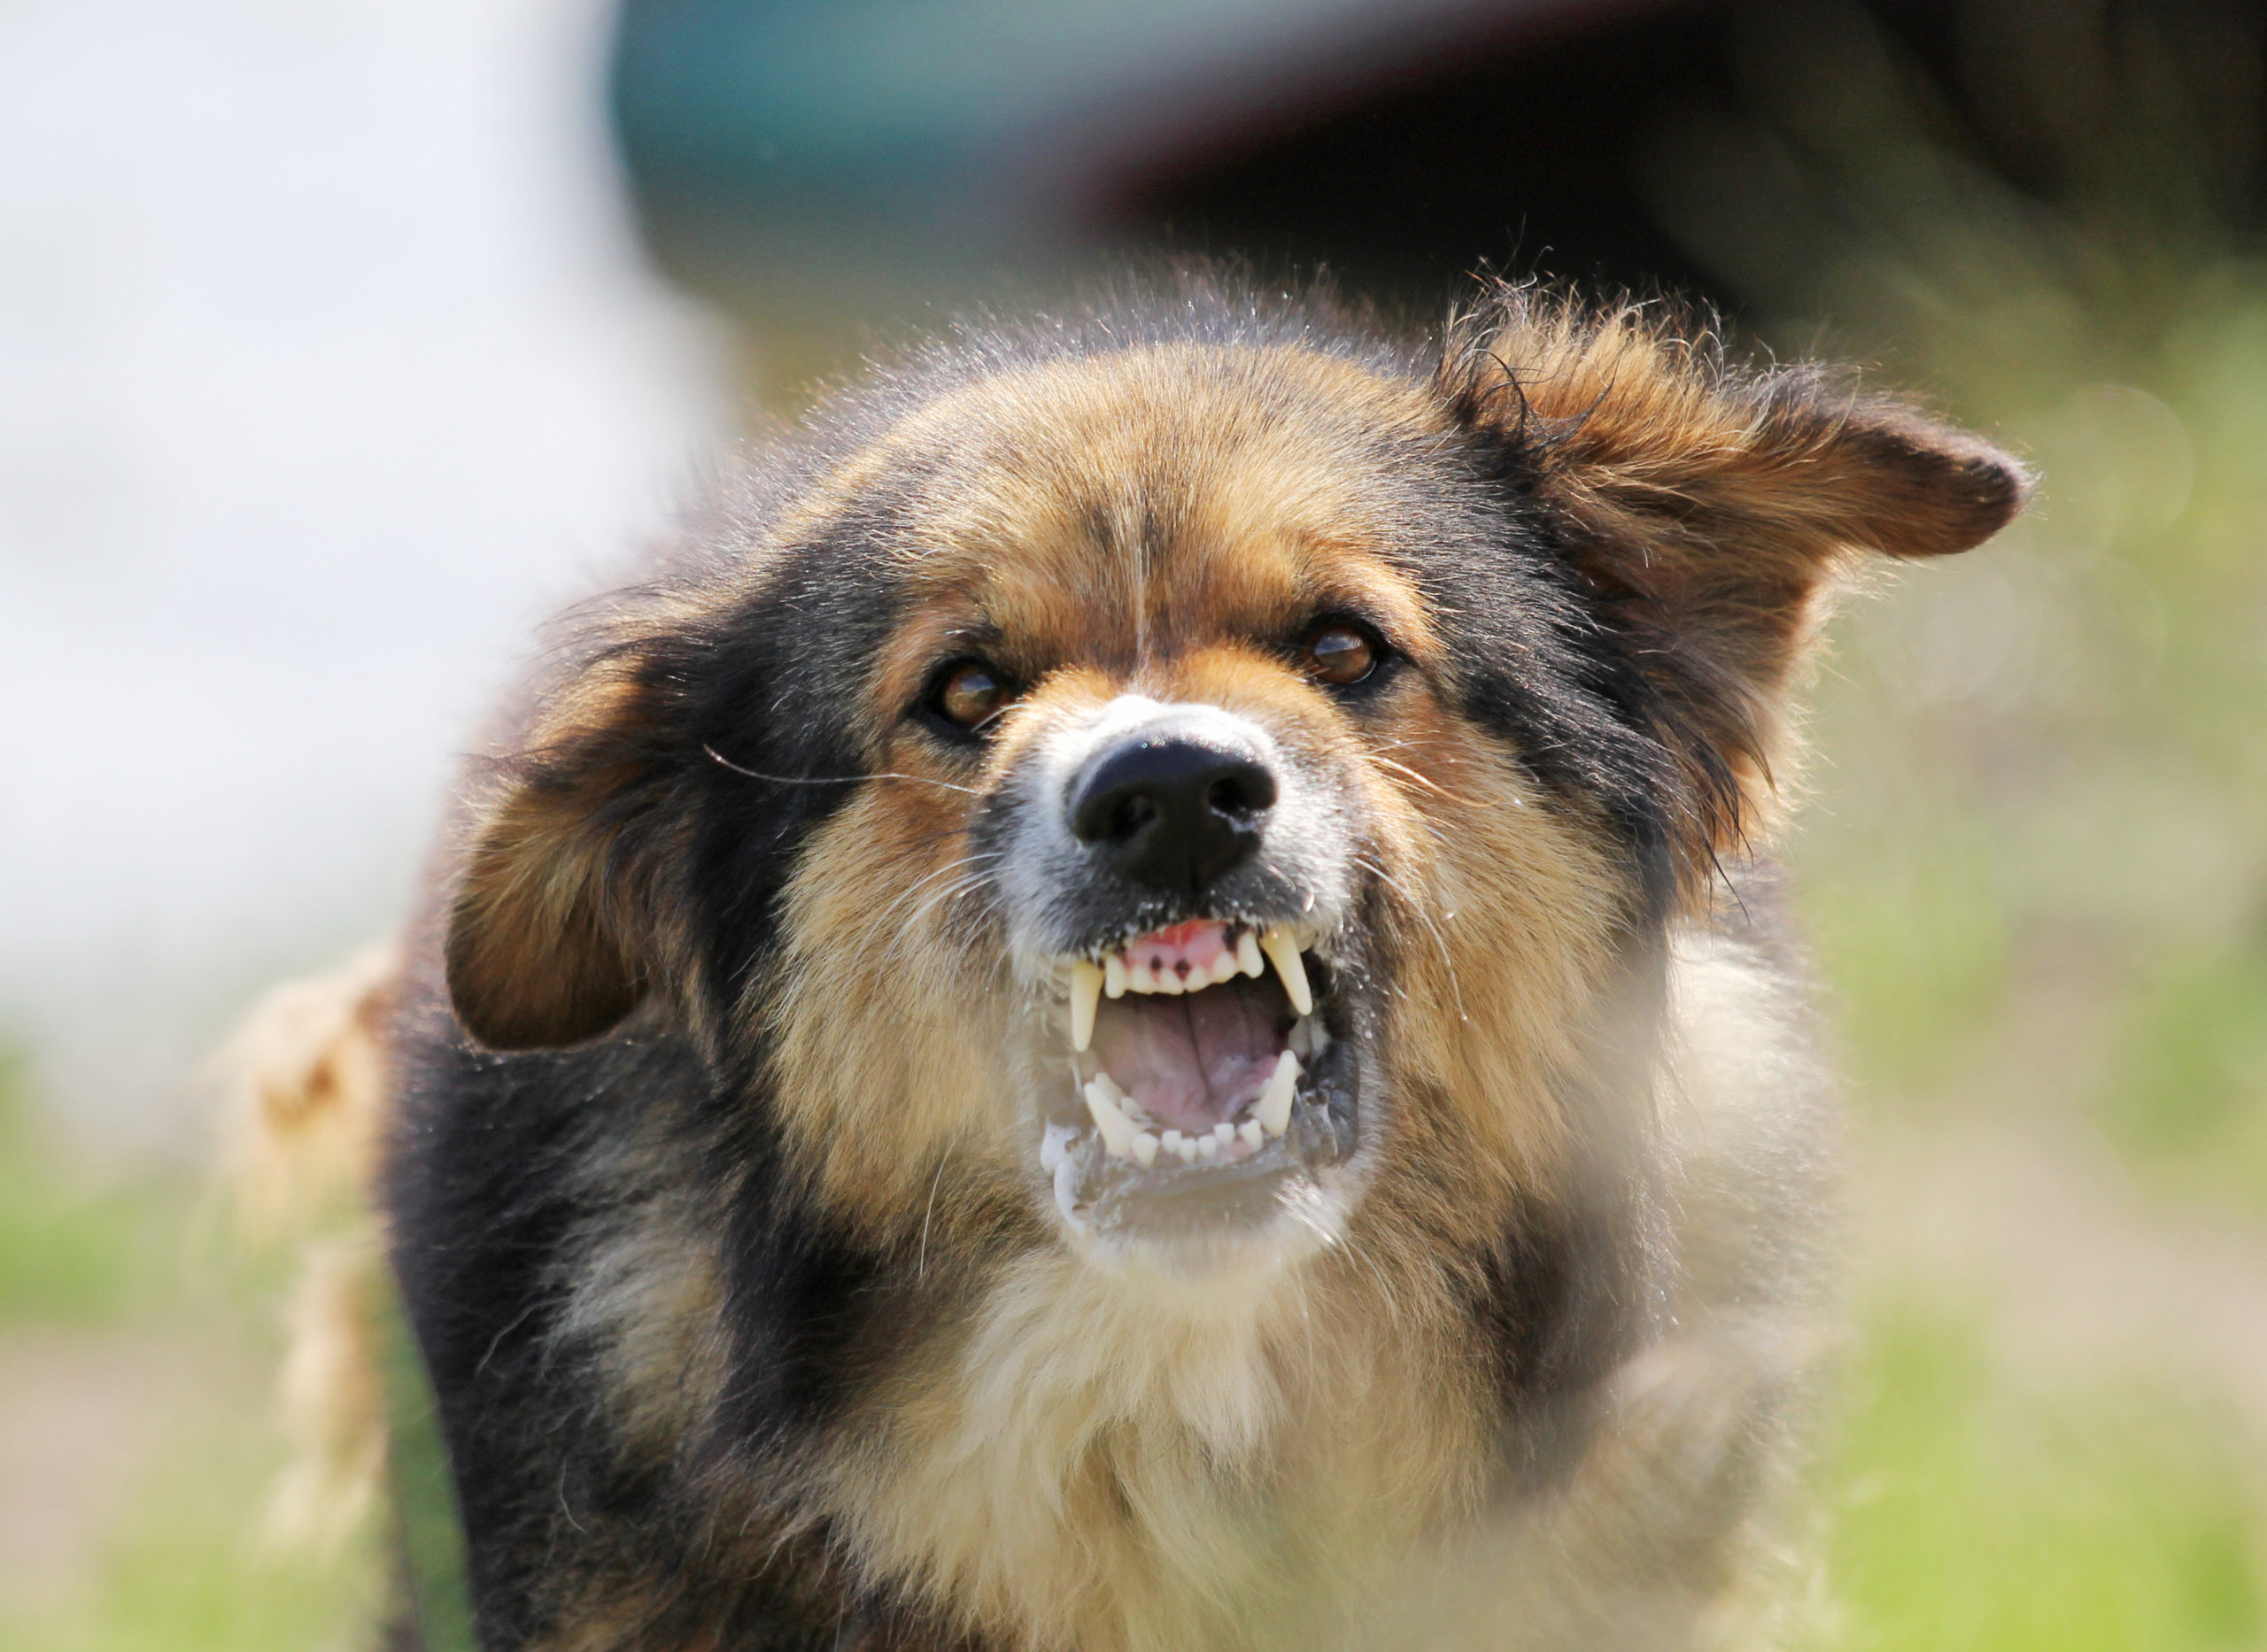 How can I strengthen my dog bite case - Chelsie King Garza